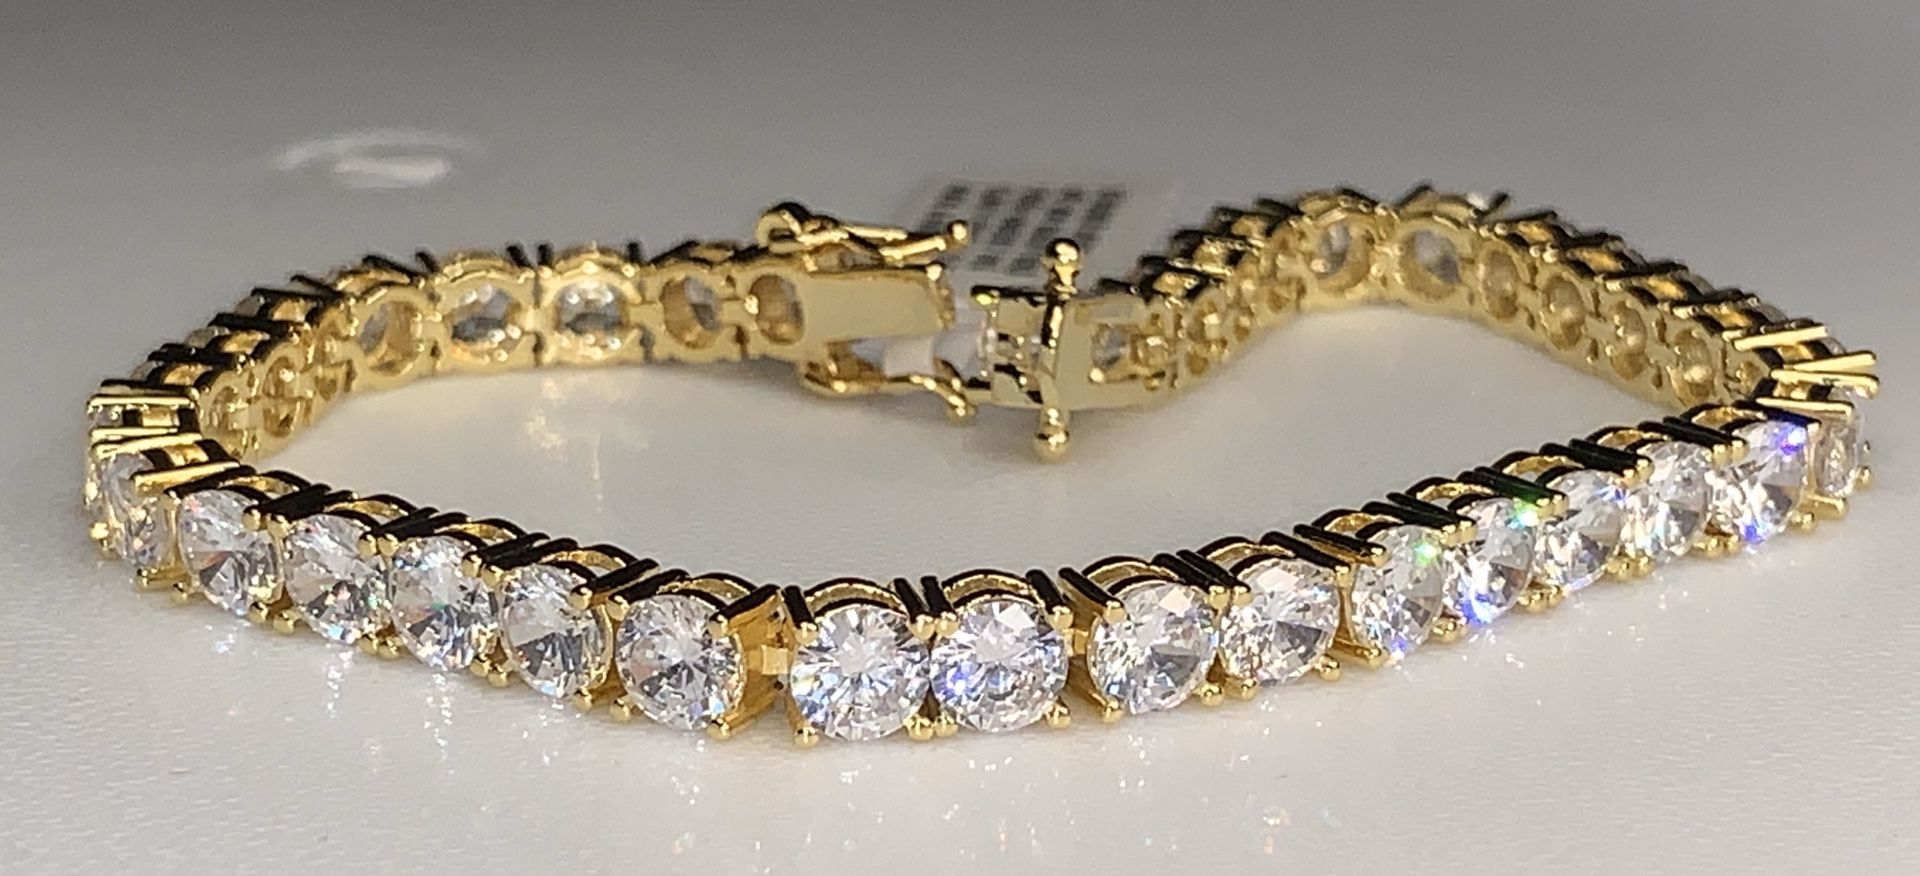 22k stainless steel tennis bracelet created with lab diamonds